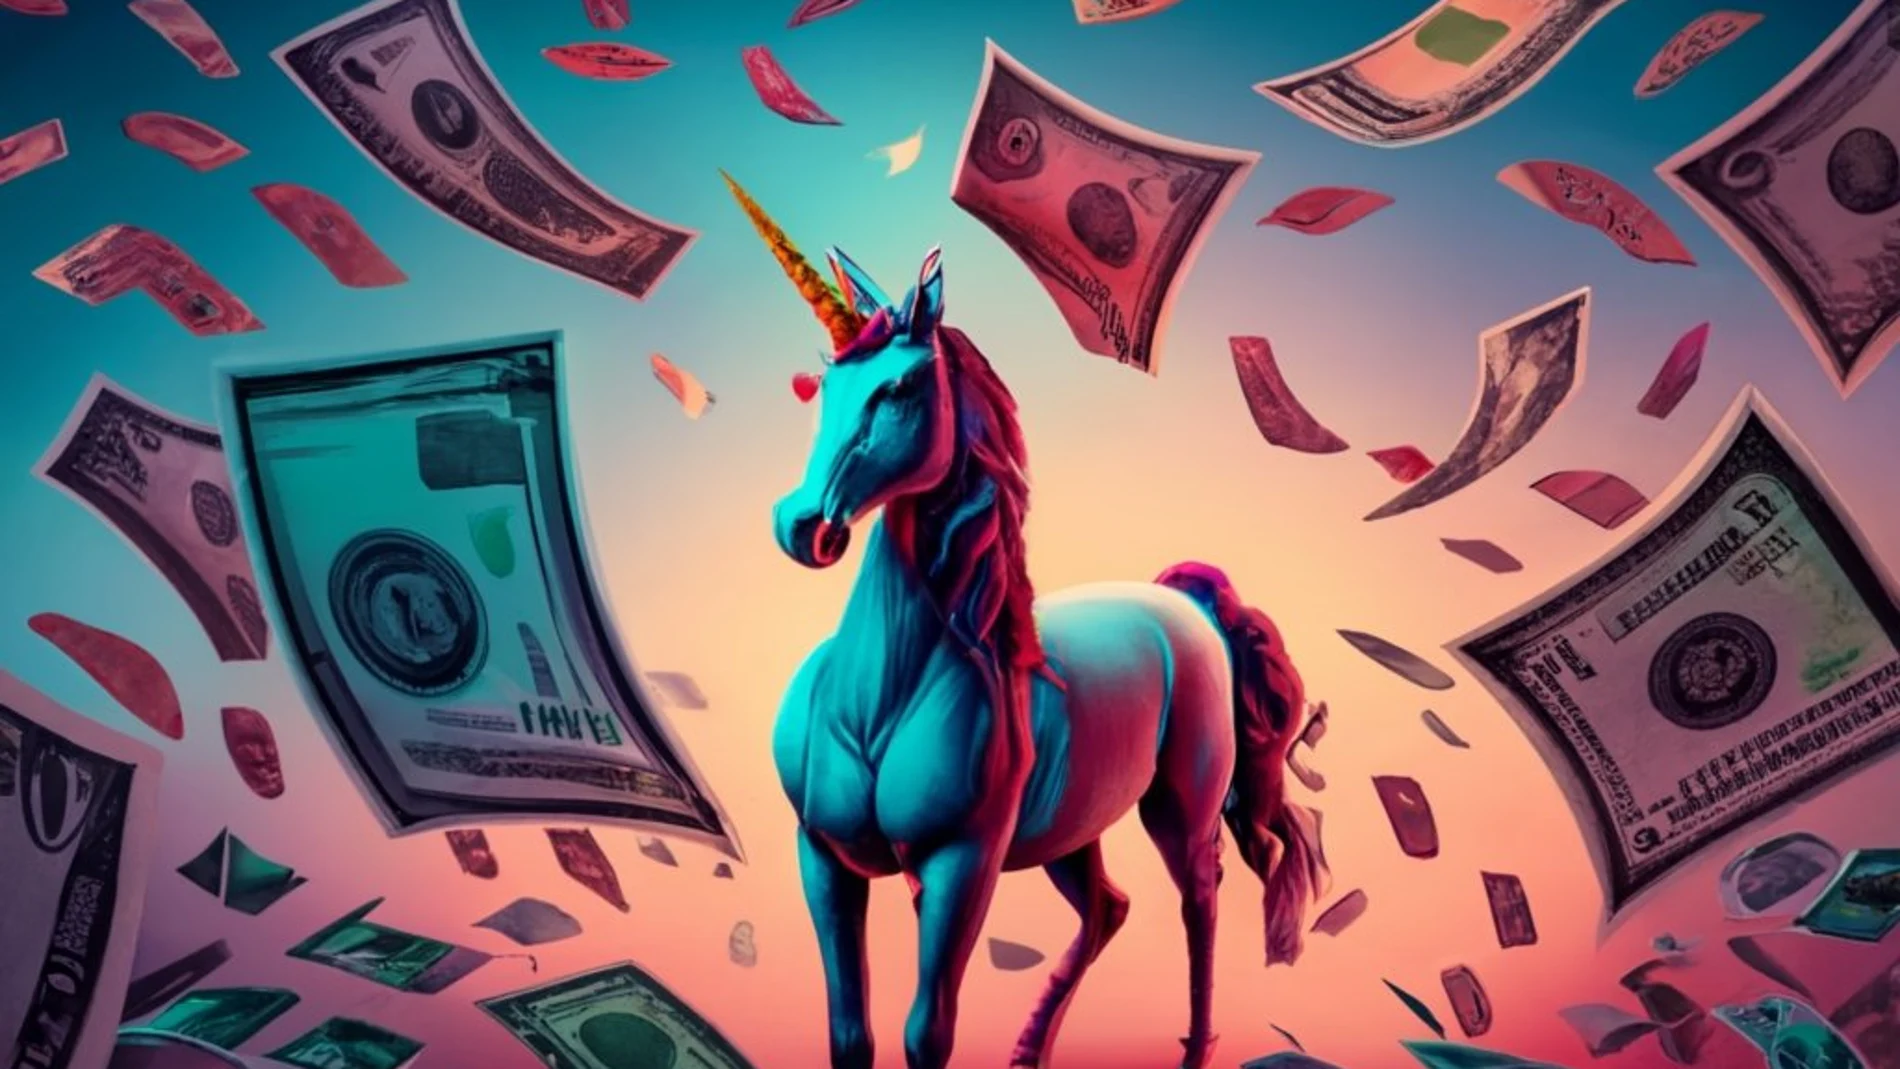 ¿Por qué algunas startups se les denomina unicornios?